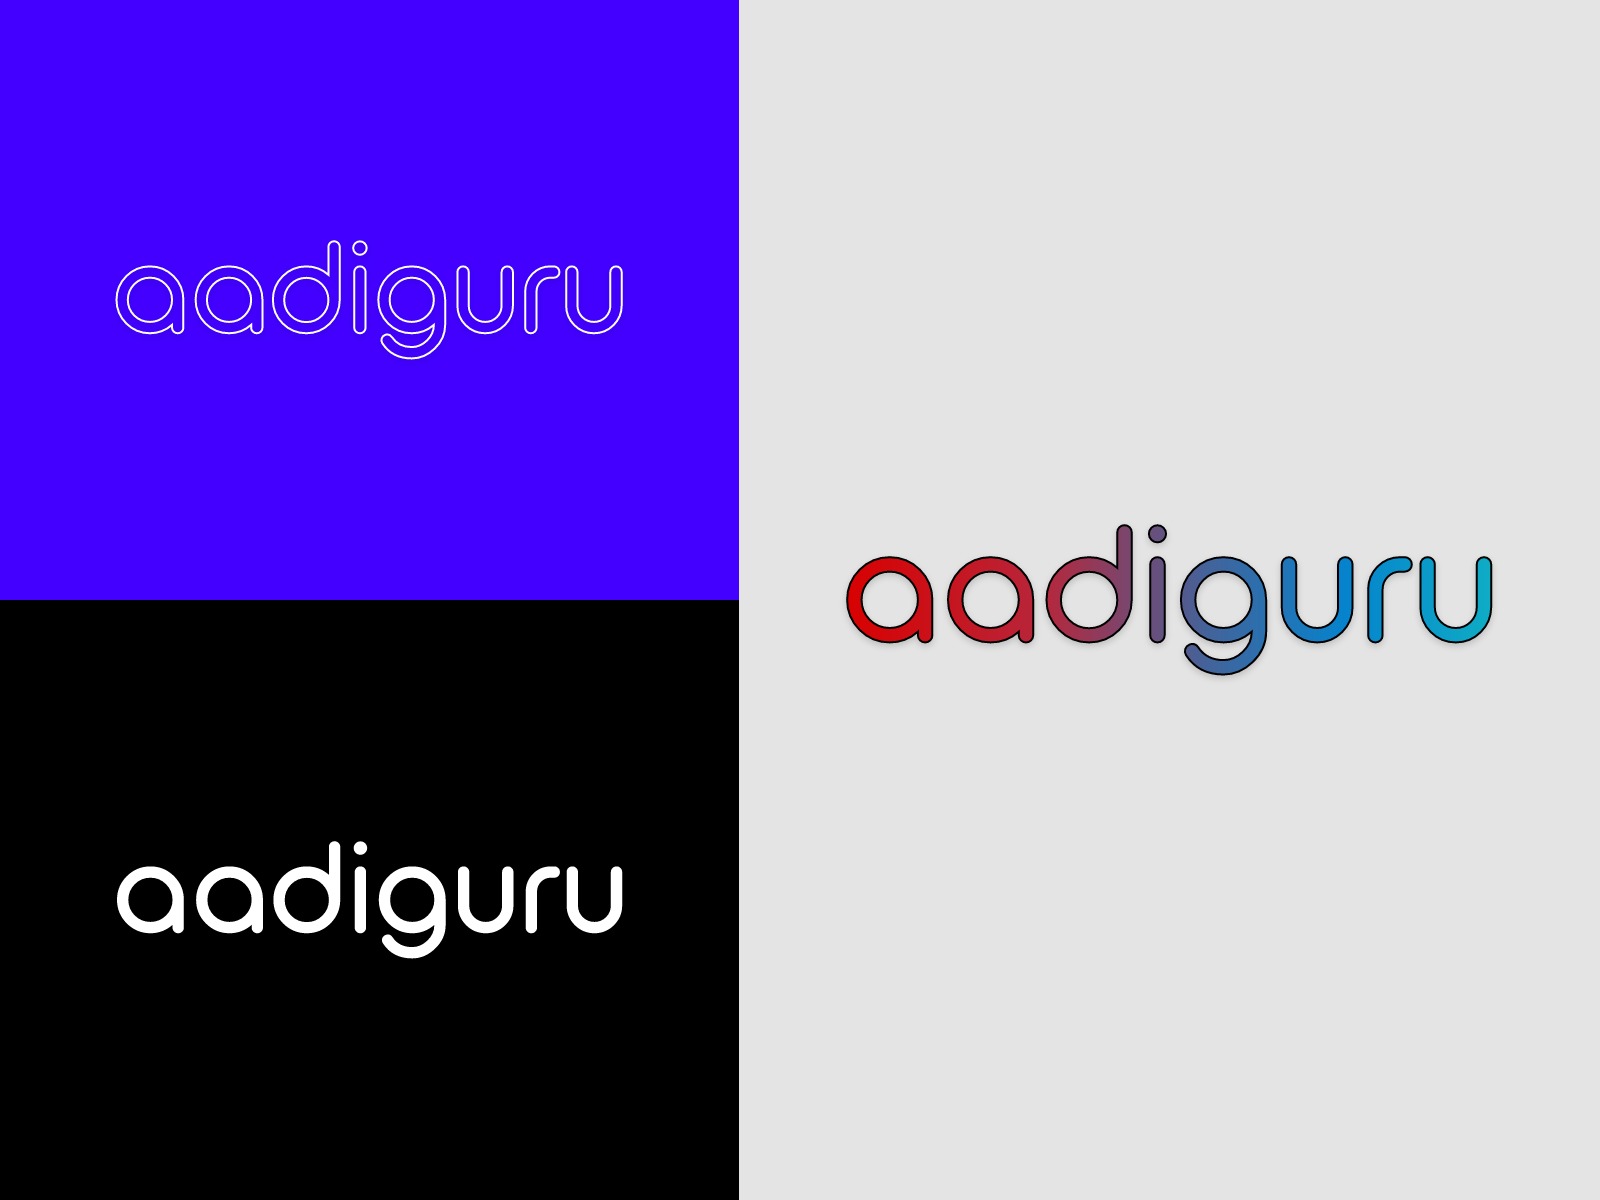 Aadiguru - Logo by Aaditya Pauranik on Dribbble